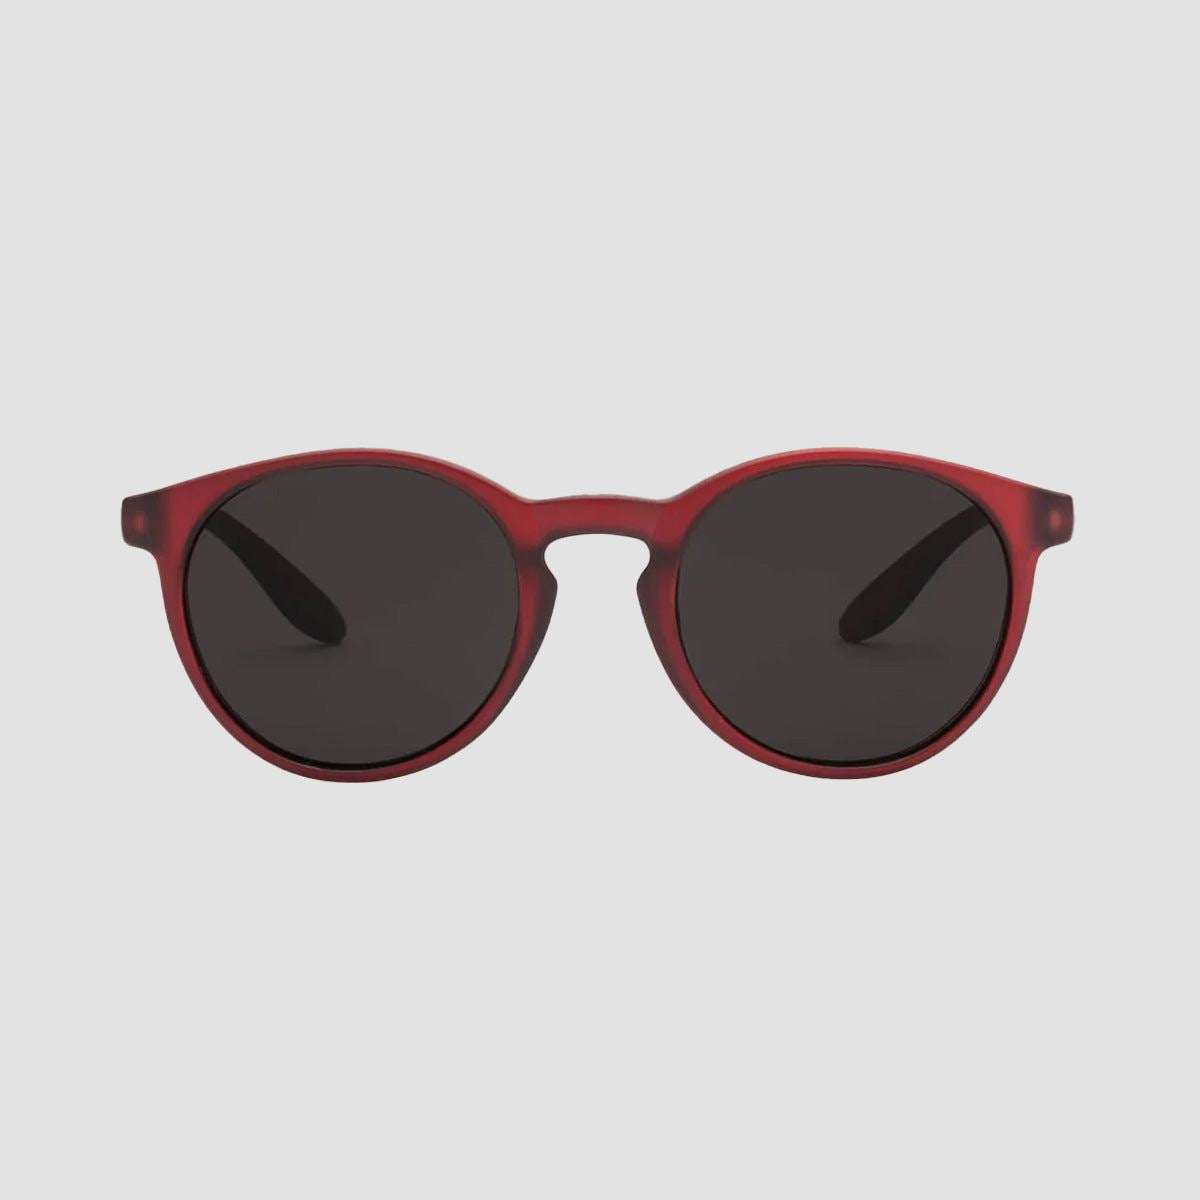 Volcom Subject Sunglasses Matte Trans Pomagranate/Grey - Unisex